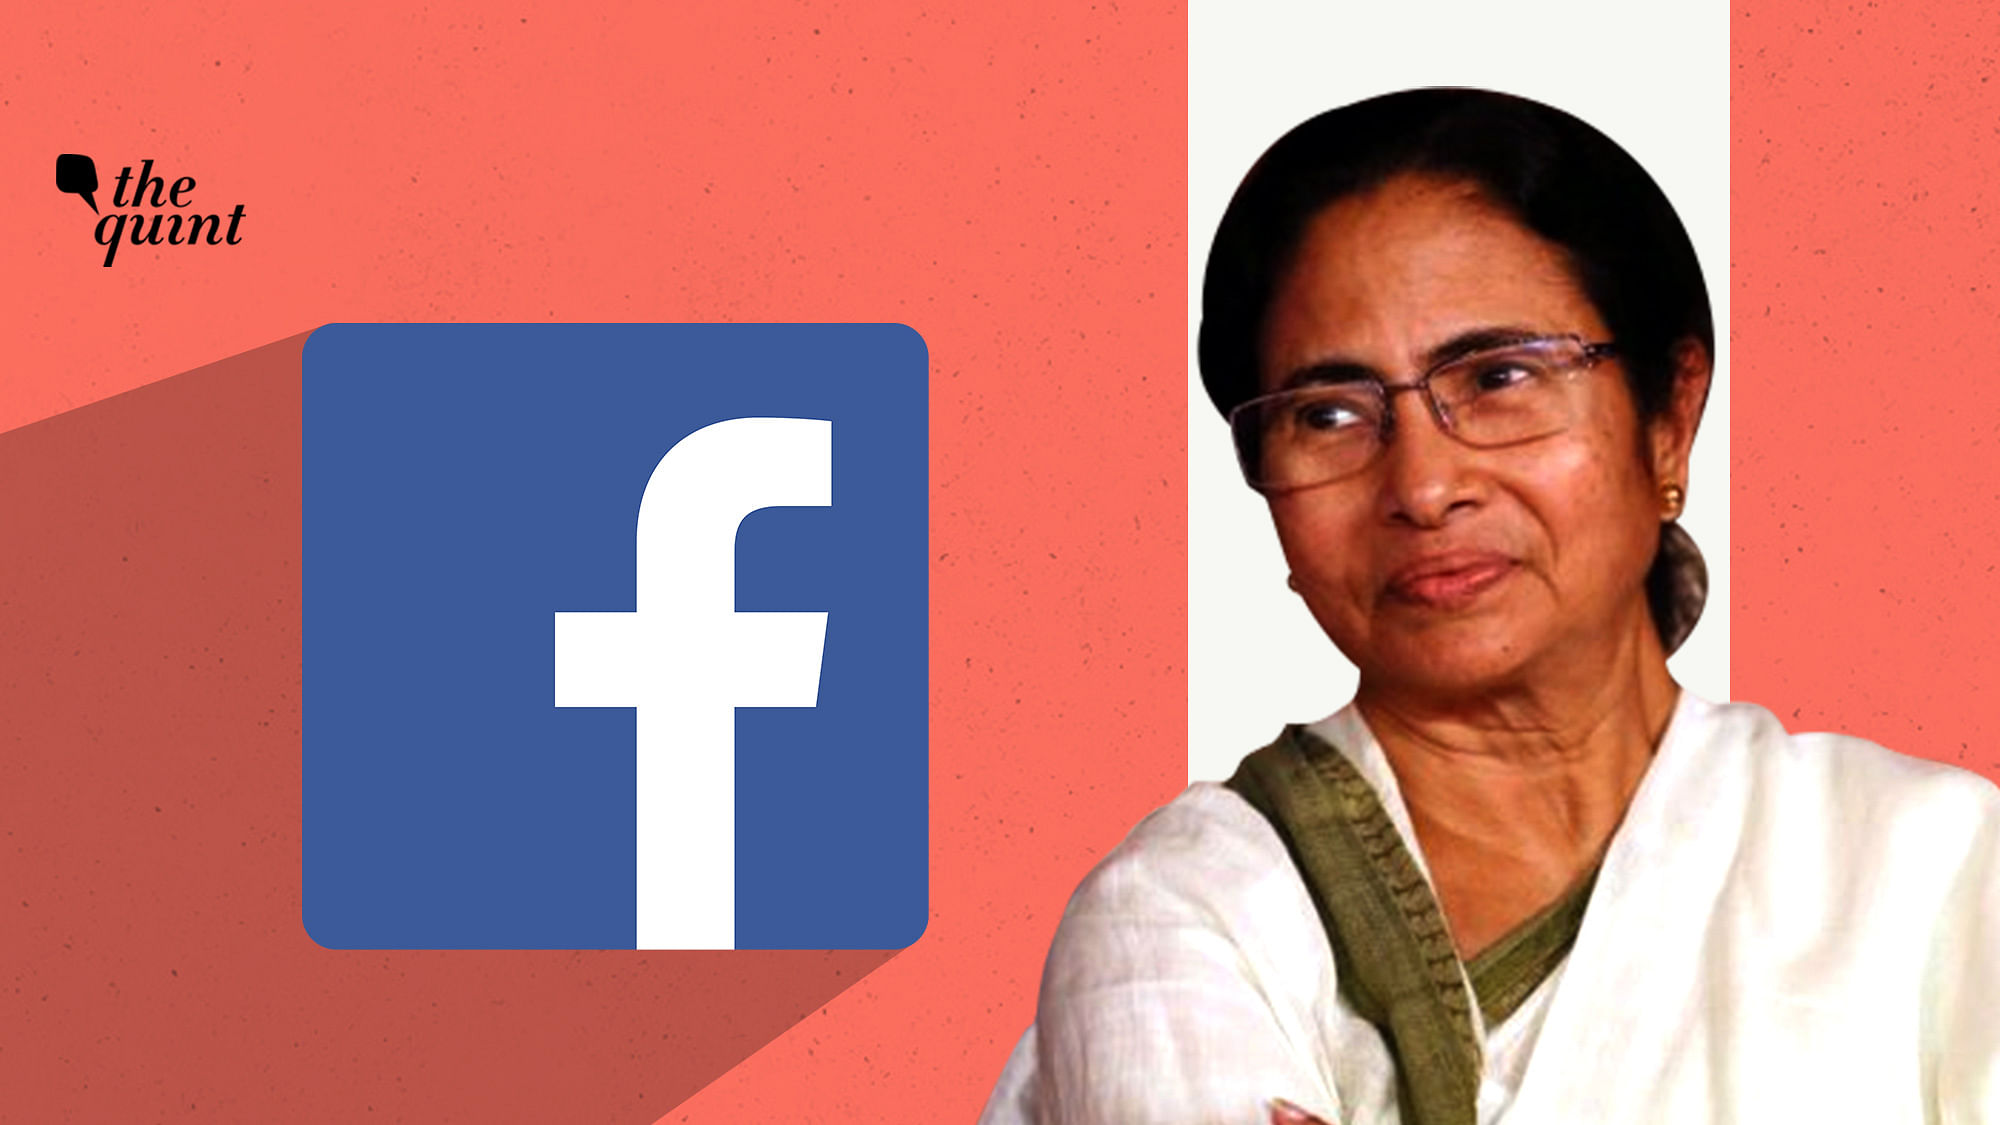 TMC Highest Political Spender On Facebook India in Last One Month